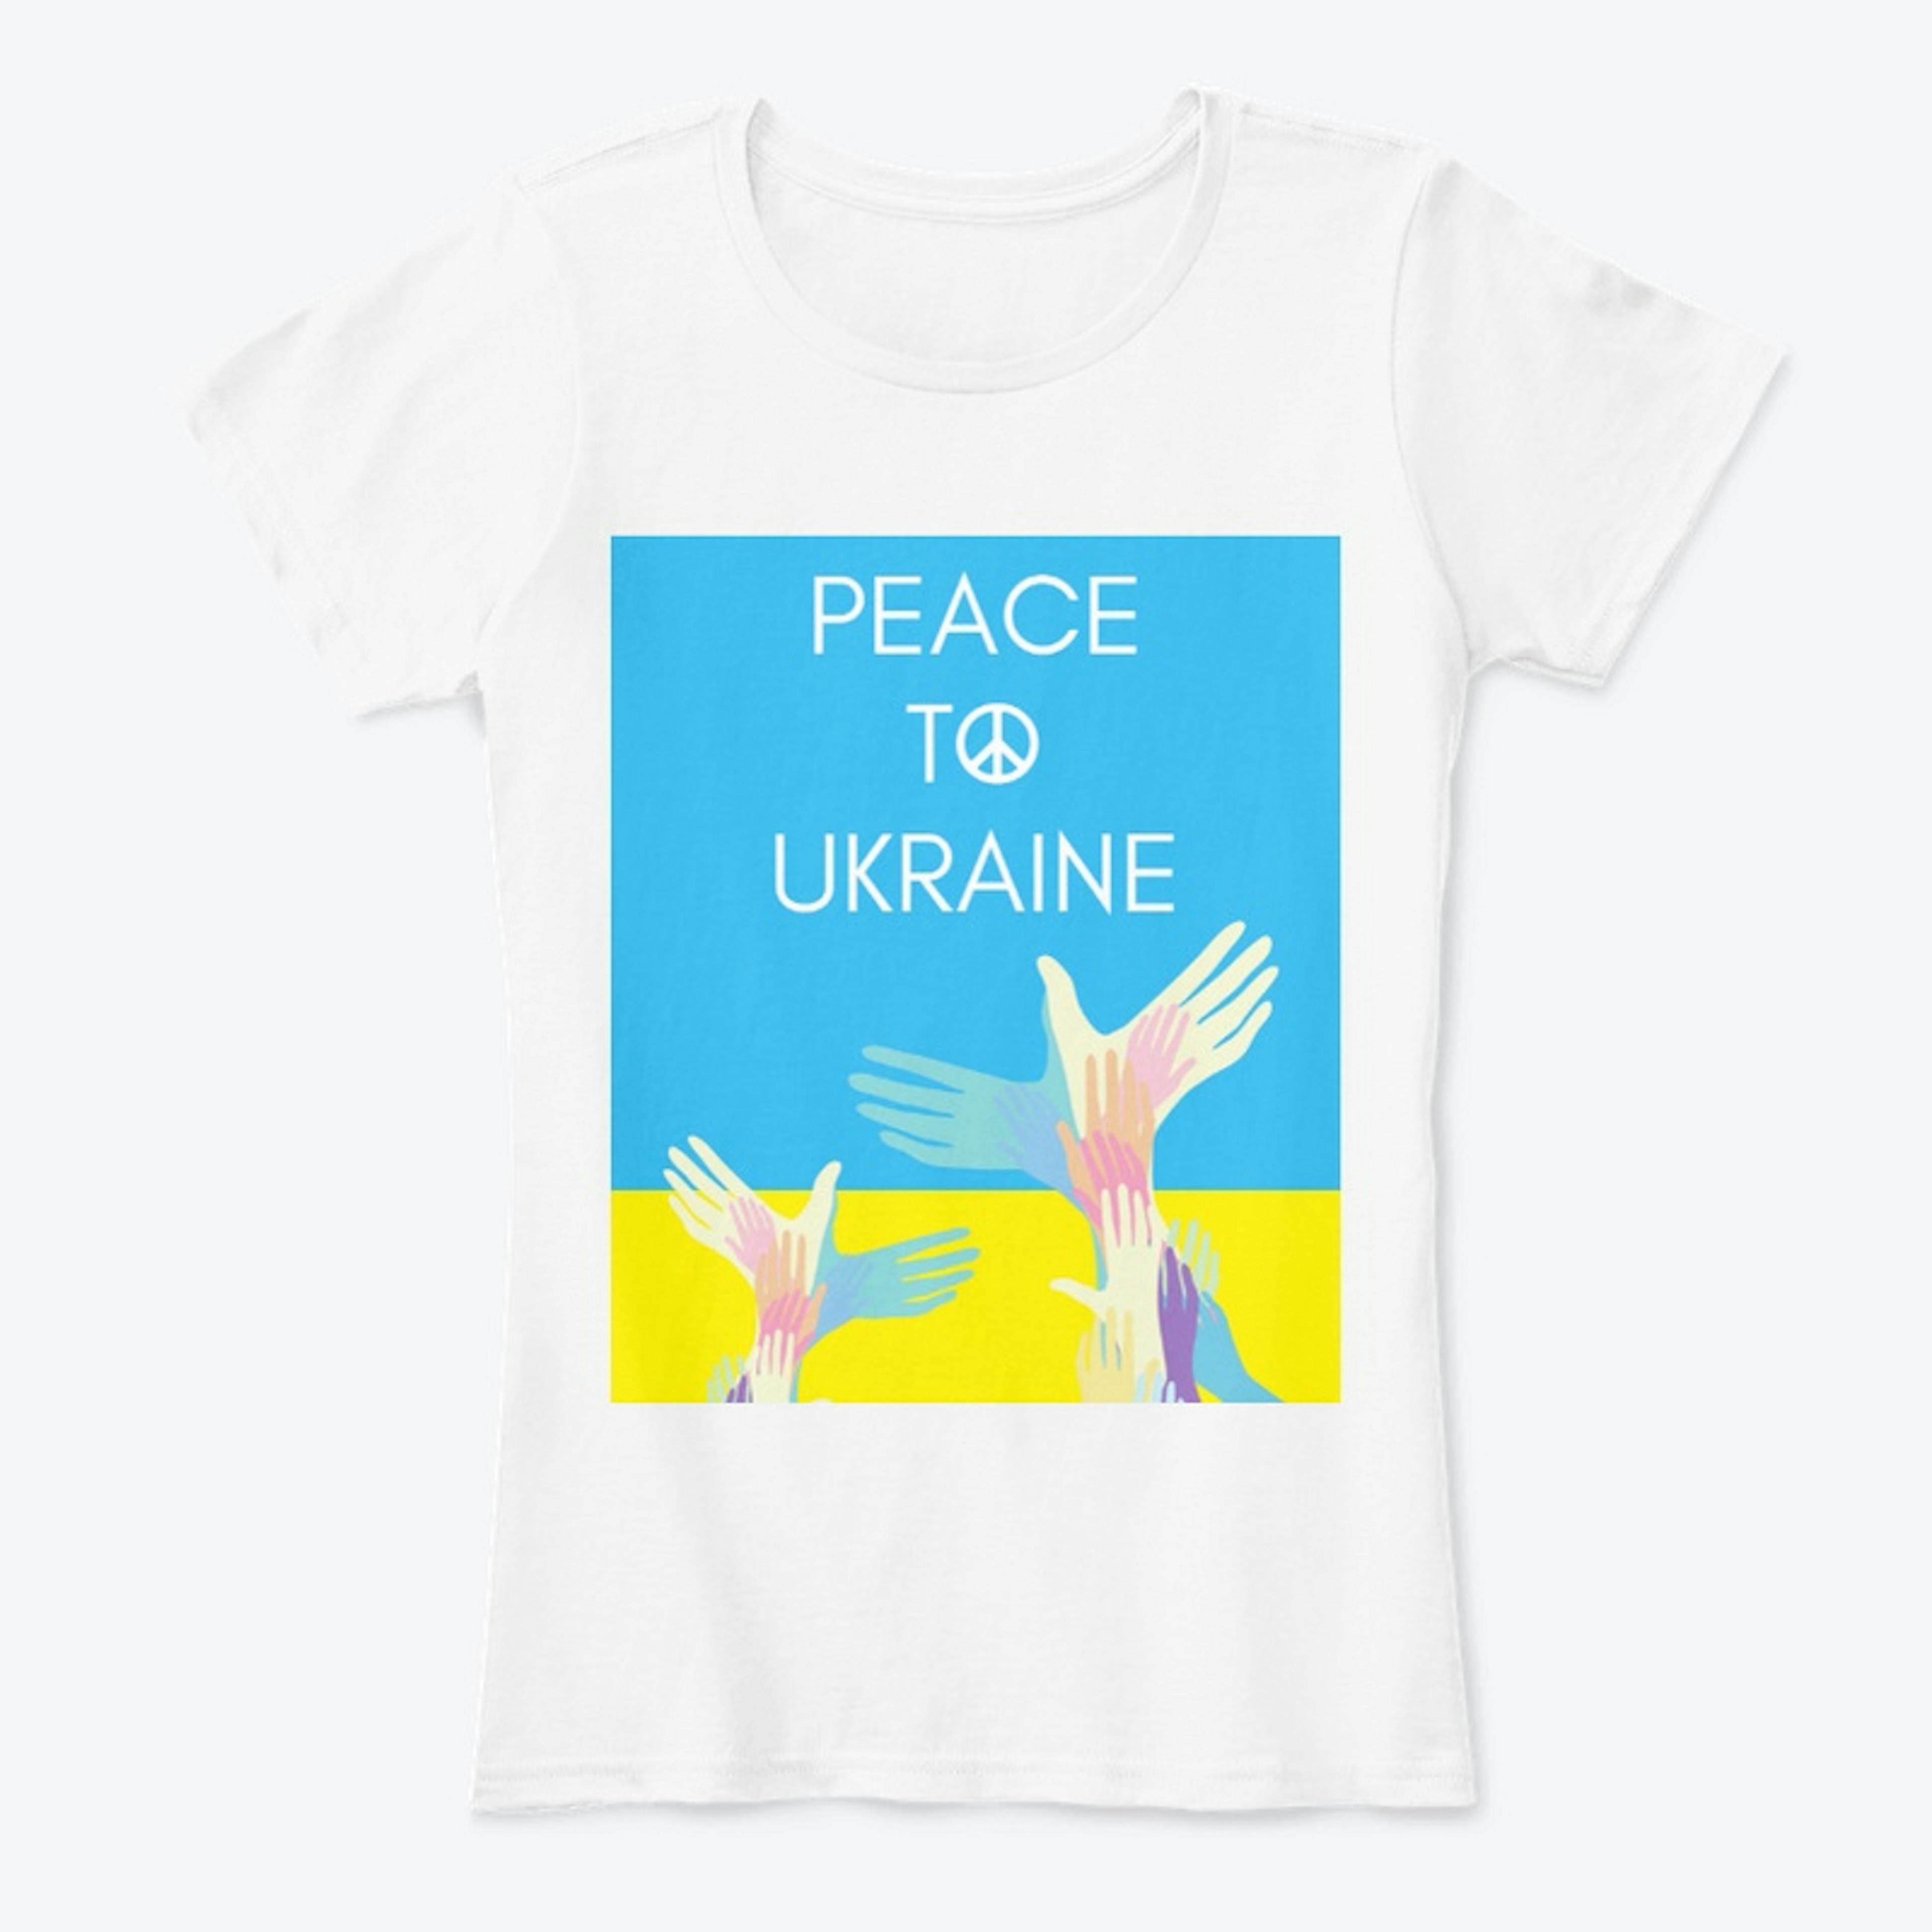 PEACE TO UKRAINE